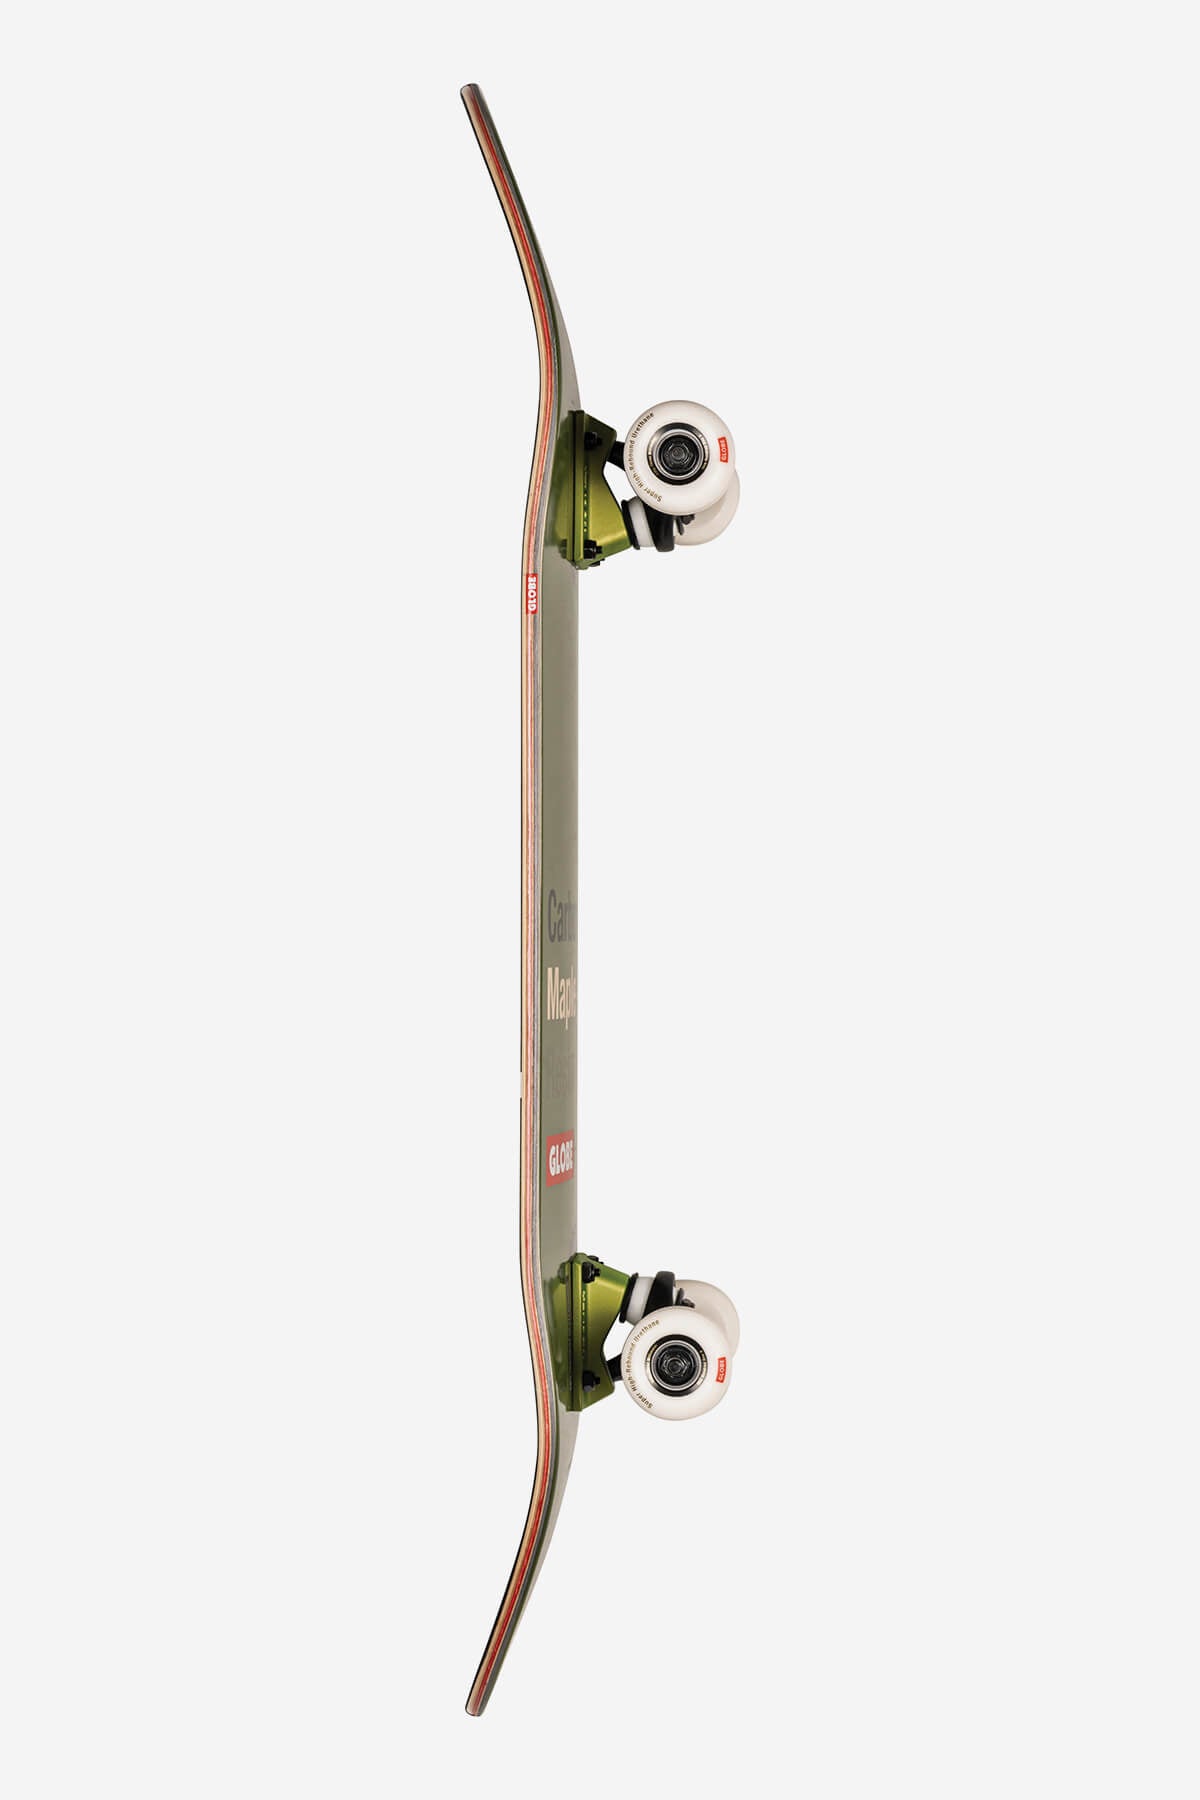 Globe Skateboard completa G3 Bar 8,0" Completa Skateboard in Impact/Olive